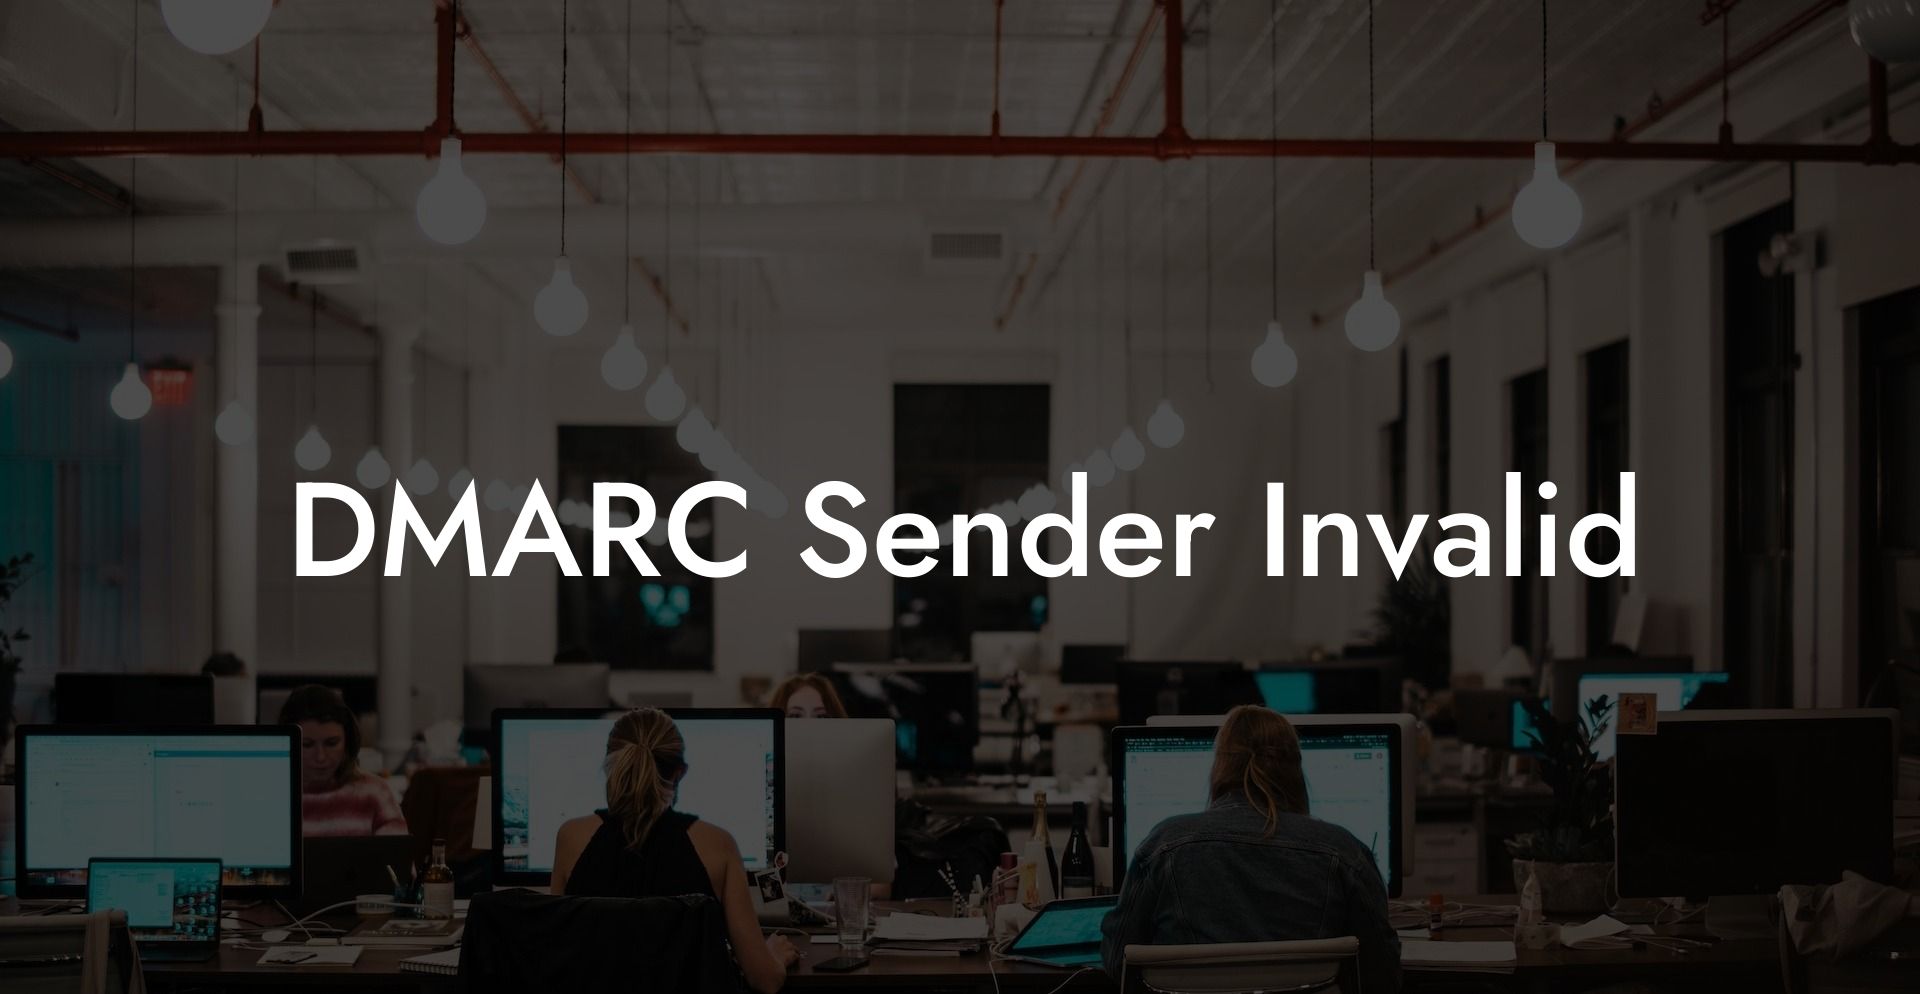 DMARC Sender Invalid